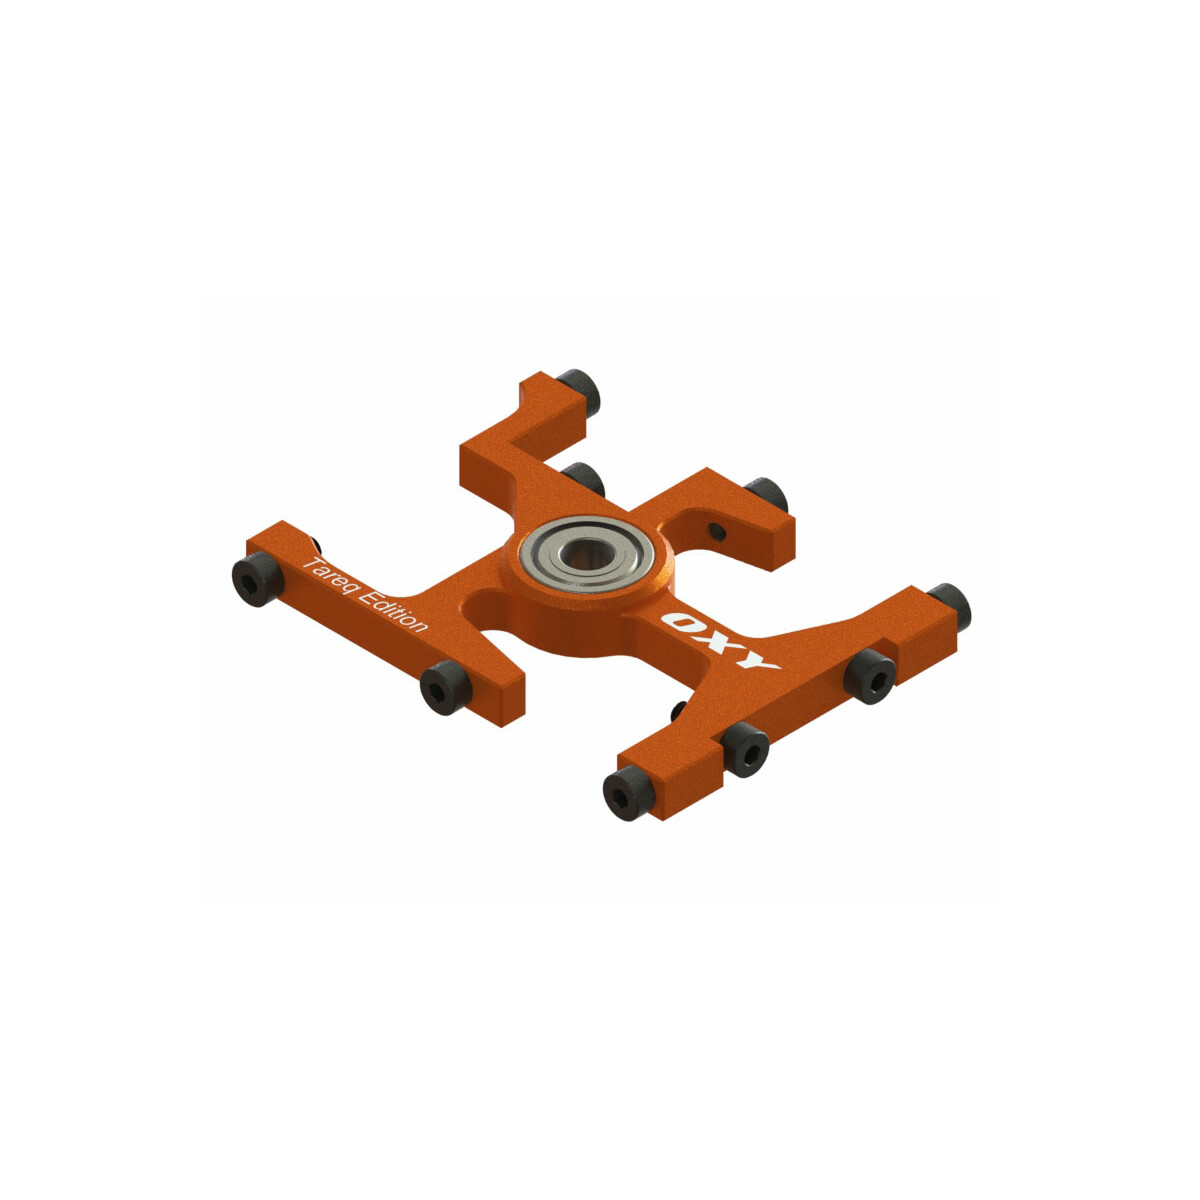 OXY3 TE - Upper Main Shaft Bearing Block, Orange